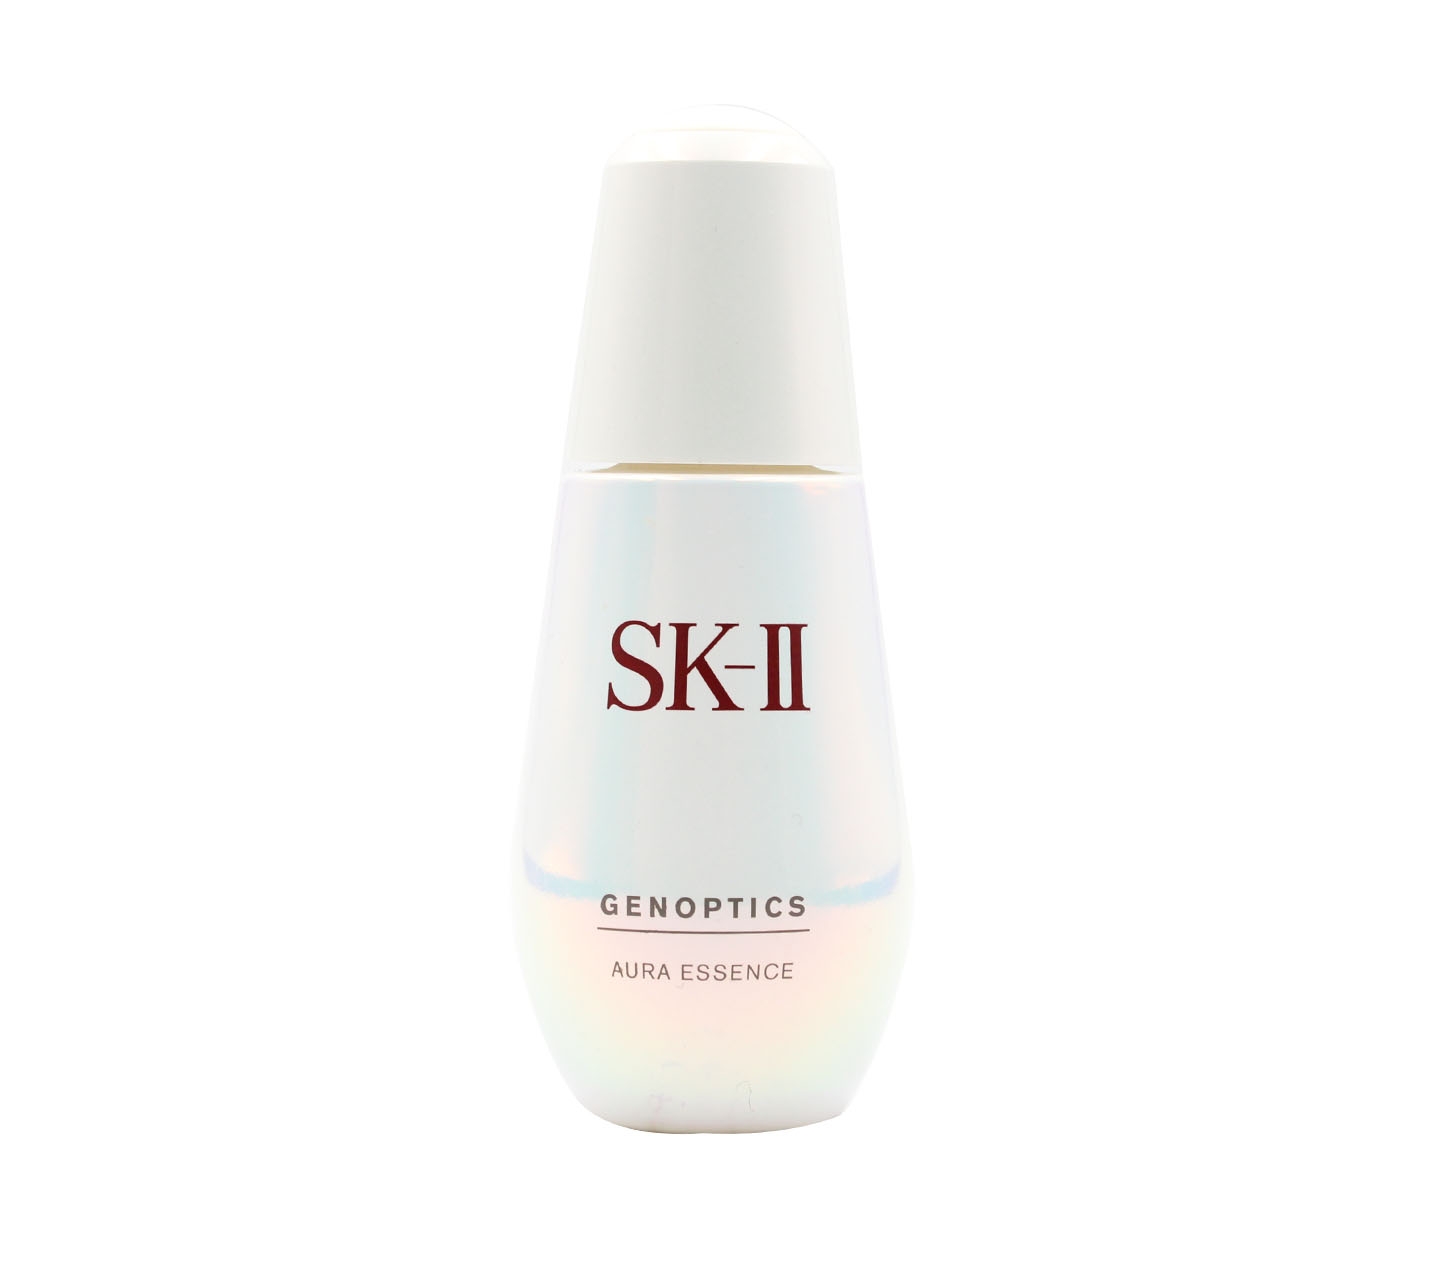 SK-II Genoptics Aura Essence Skin Care